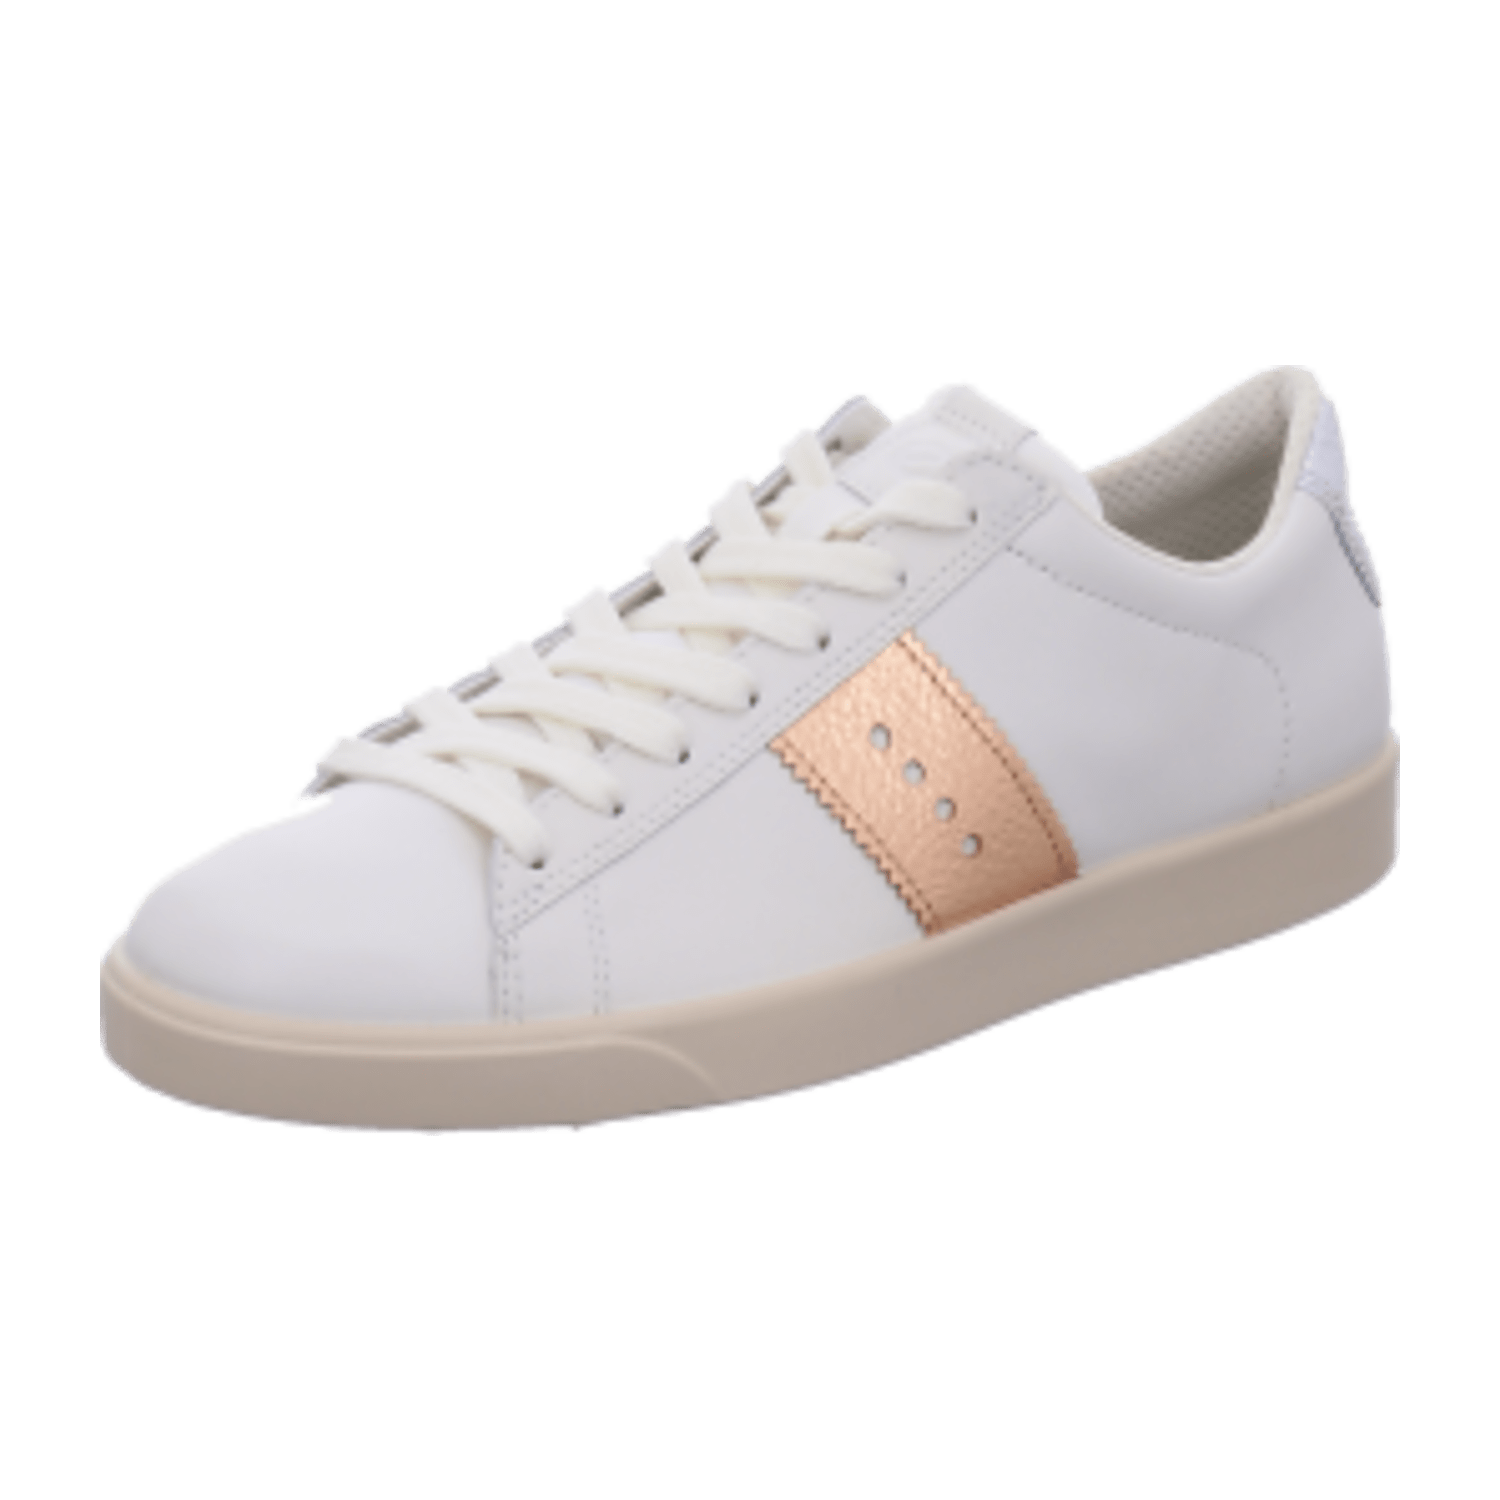 Ecco Street Lite Schuhe Sneaker weiß metallic 212803